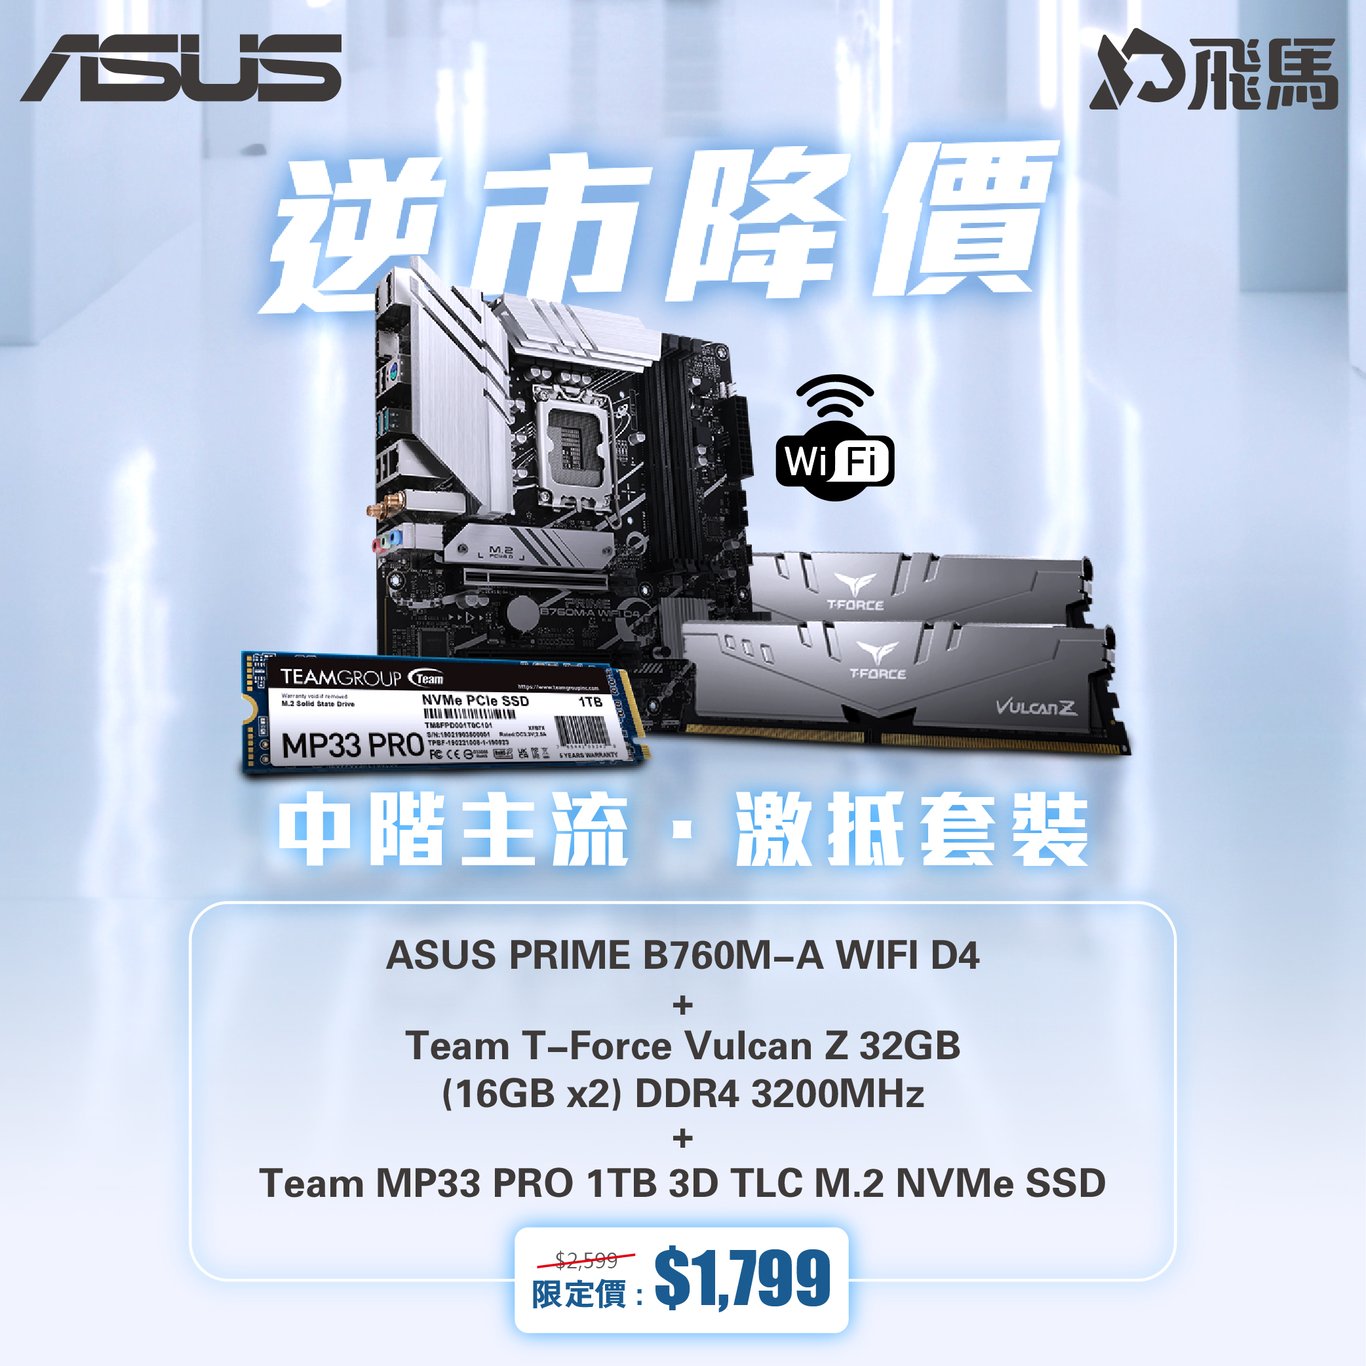 ASUS PRIME B760M-A WIFI D4 + Team T-Force Vulcan Z 32GB (16GB x2) DDR4 3200MHz + Team MP33 PRO 1TB 3D TLC M.2 NVMe PCIe 3.0 x4 SSD 主流三寶套裝